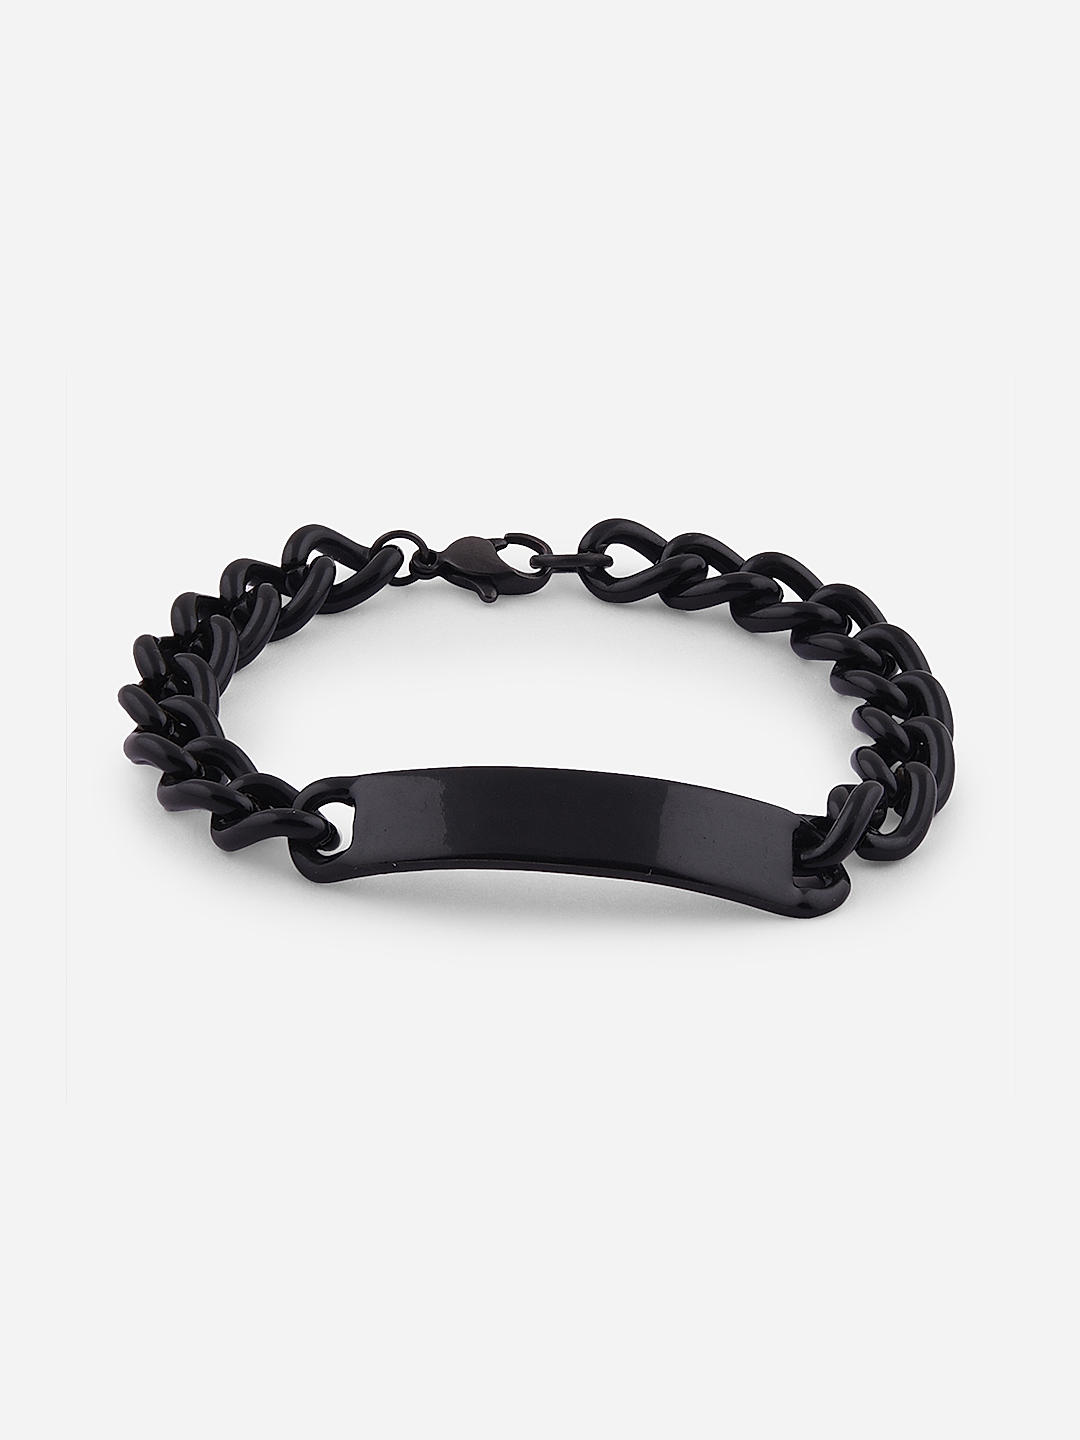 Buy Peora 316L Stainless Steel Sleek Matte Black ID Bracelet for Men Boys  (PX6SB03) Online